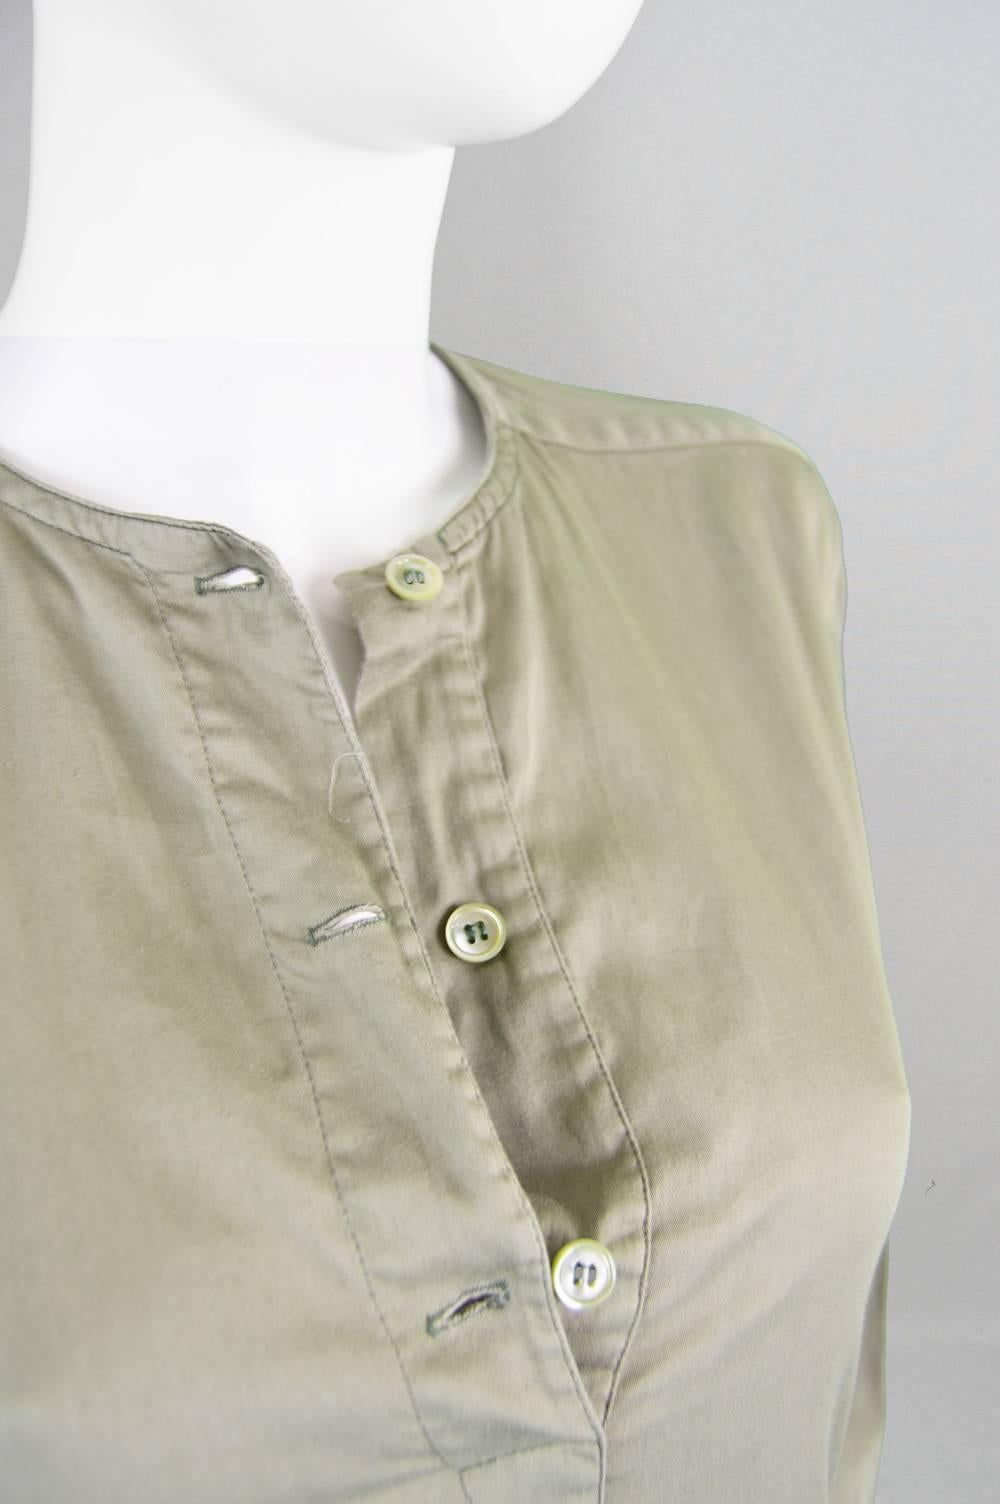 Kenzo Jap 1970s Vintage Minimalist Cotton Shift Dress with Oversized Pockets For Sale 1